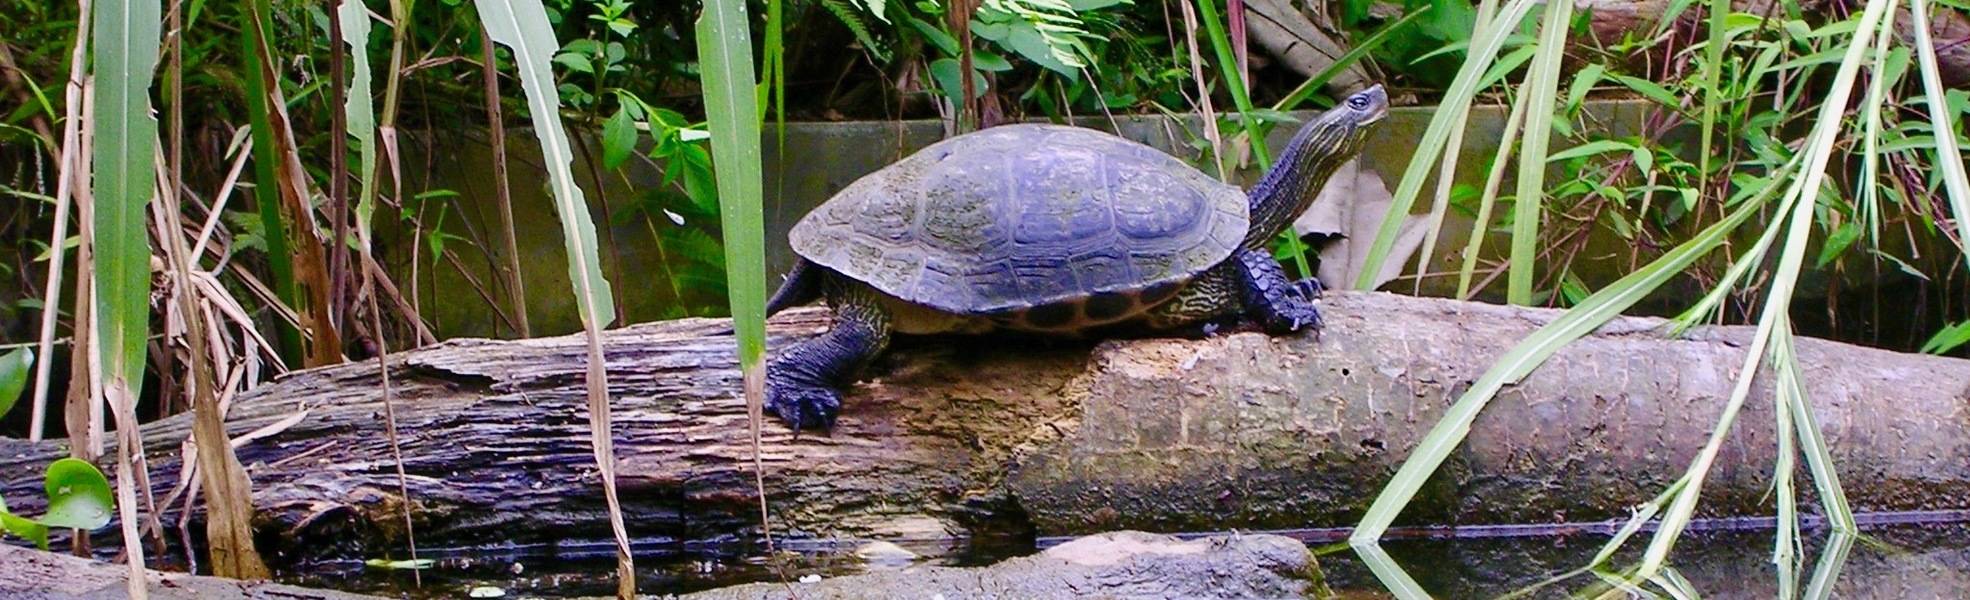 Volunteering with turtles in Vietnam